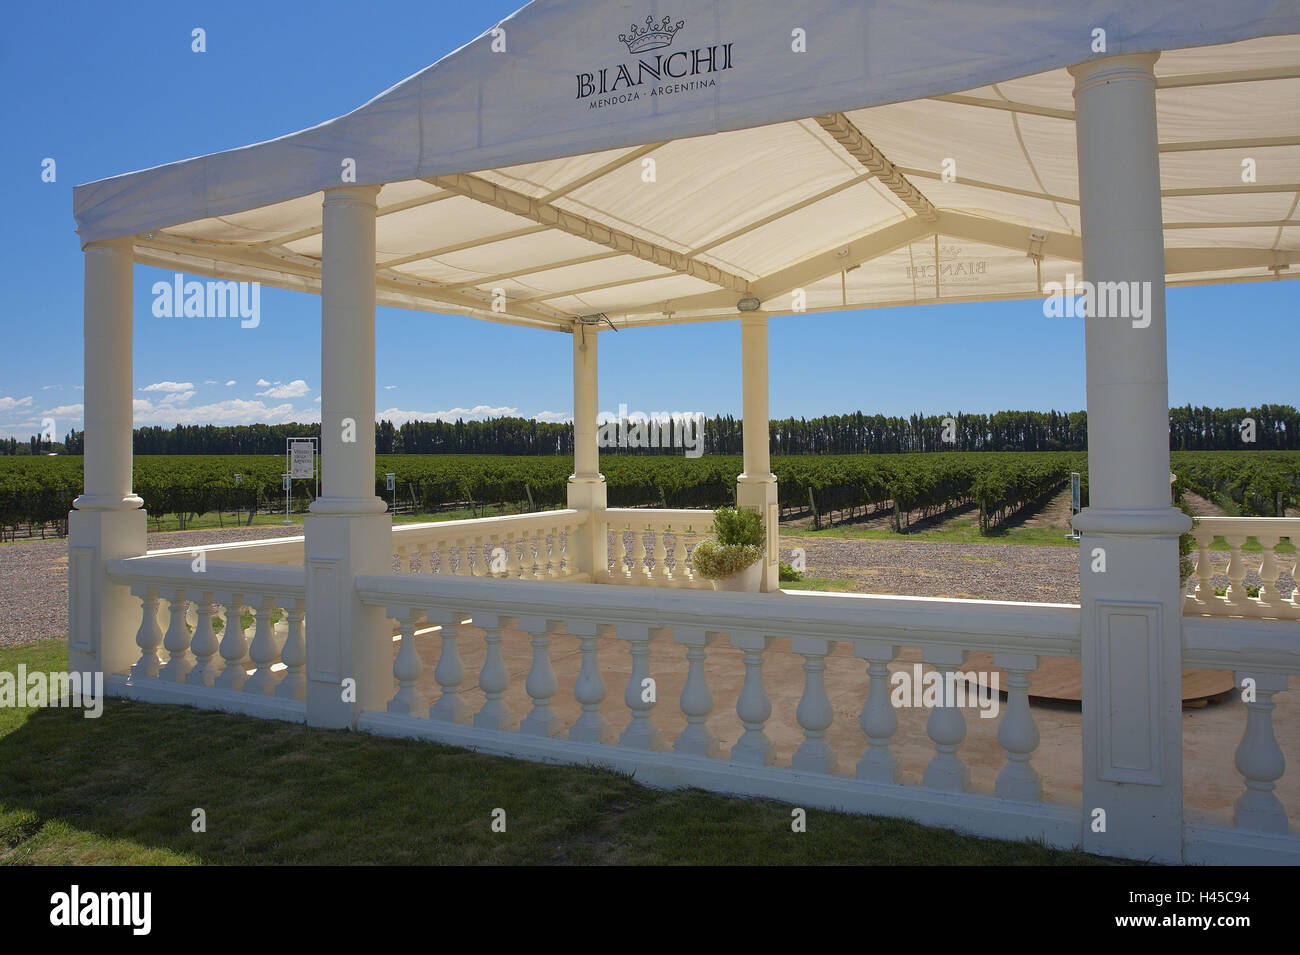 Argentina, Mendoza, San Rafael, vineyard Bianchi, fixed tent, wine fields, Stock Photo